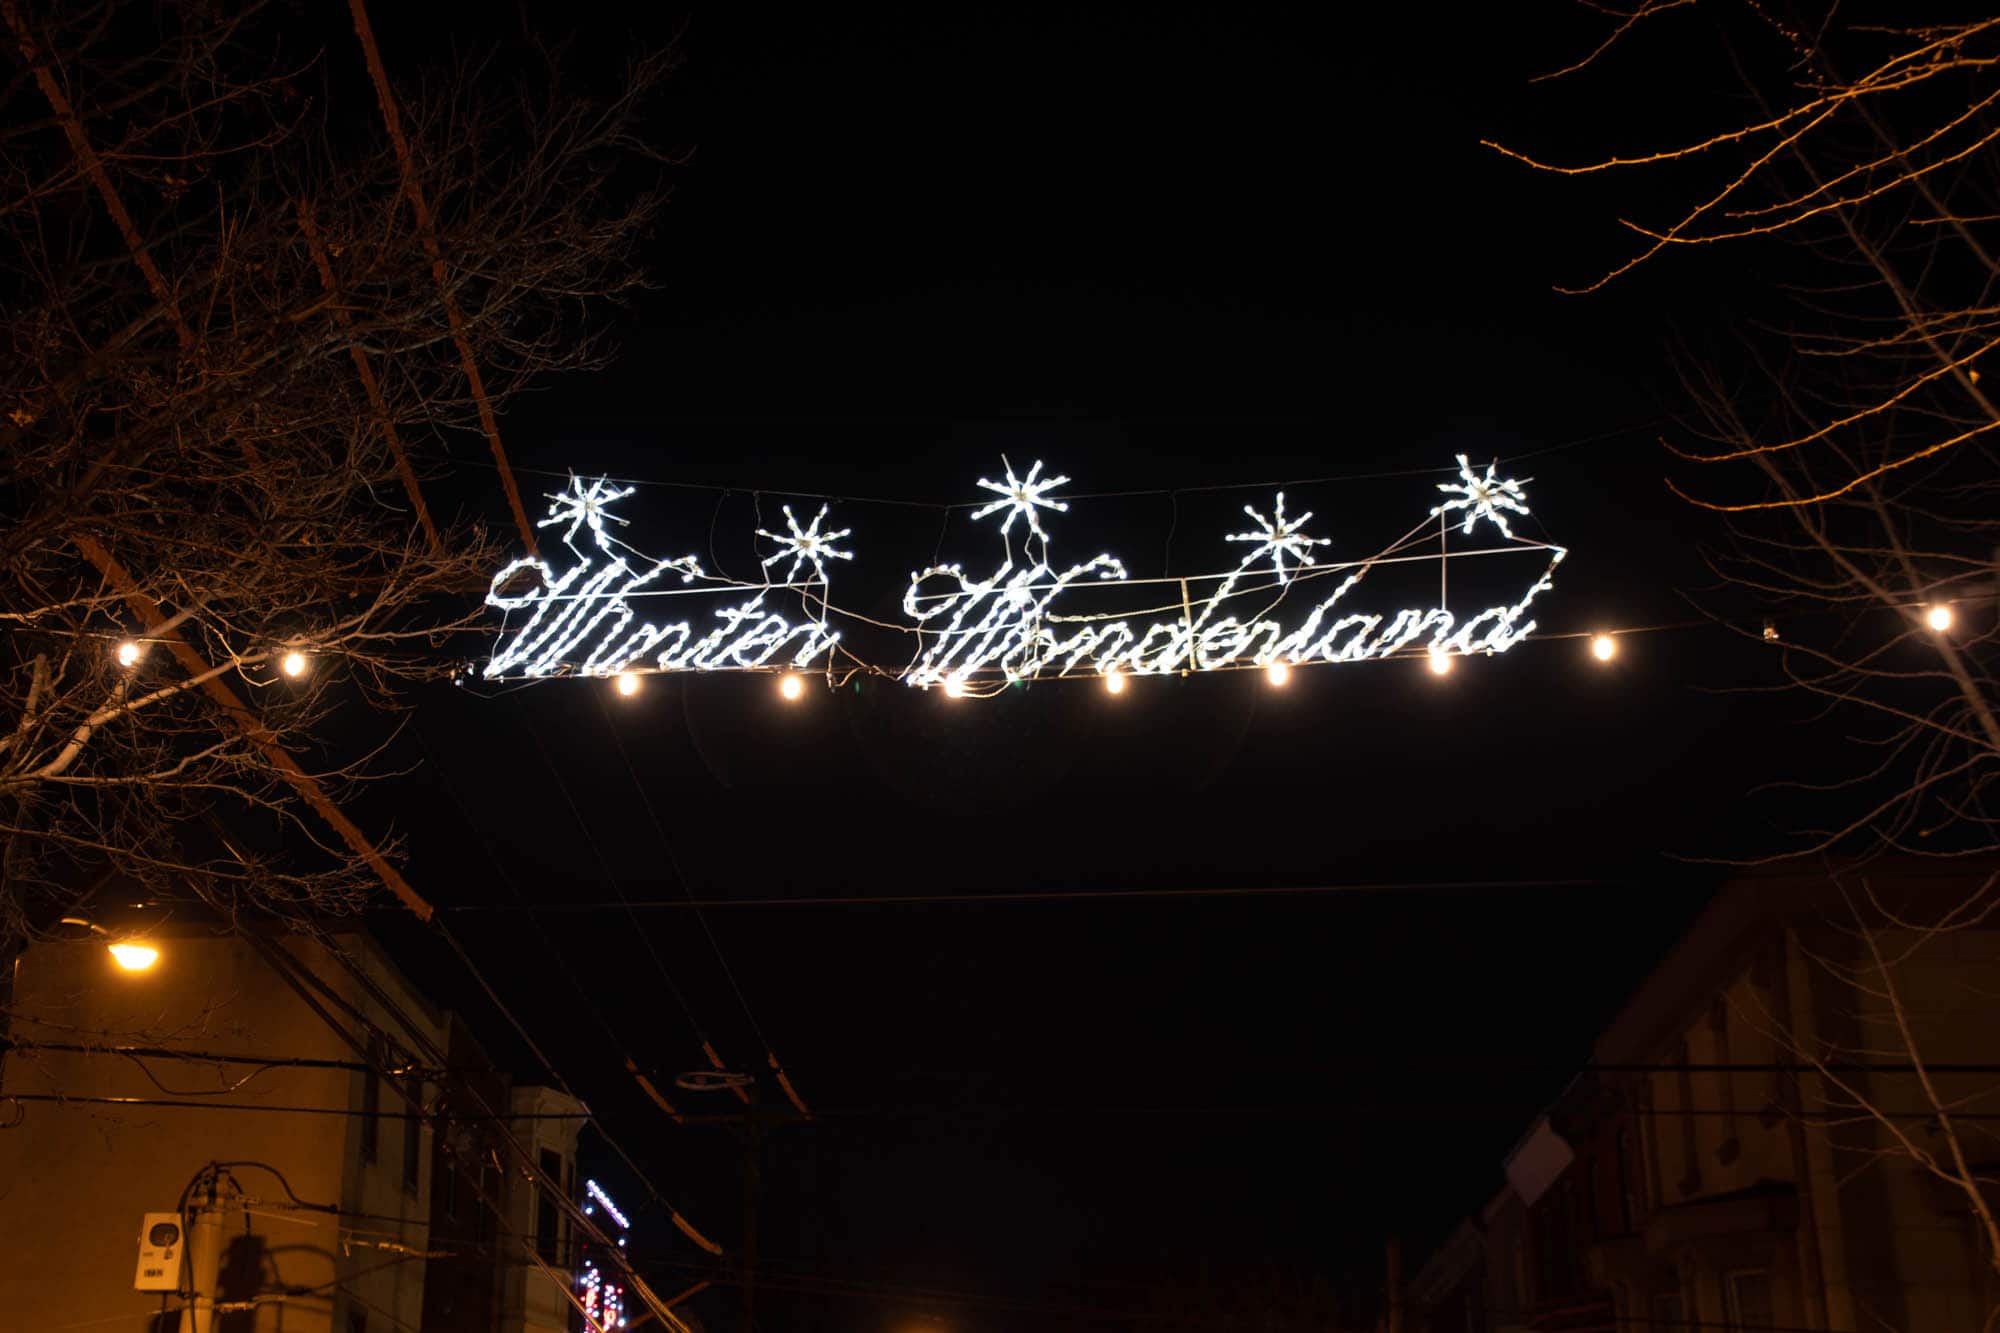 Illuminated sign over street reading 'Winter Wonderland.'